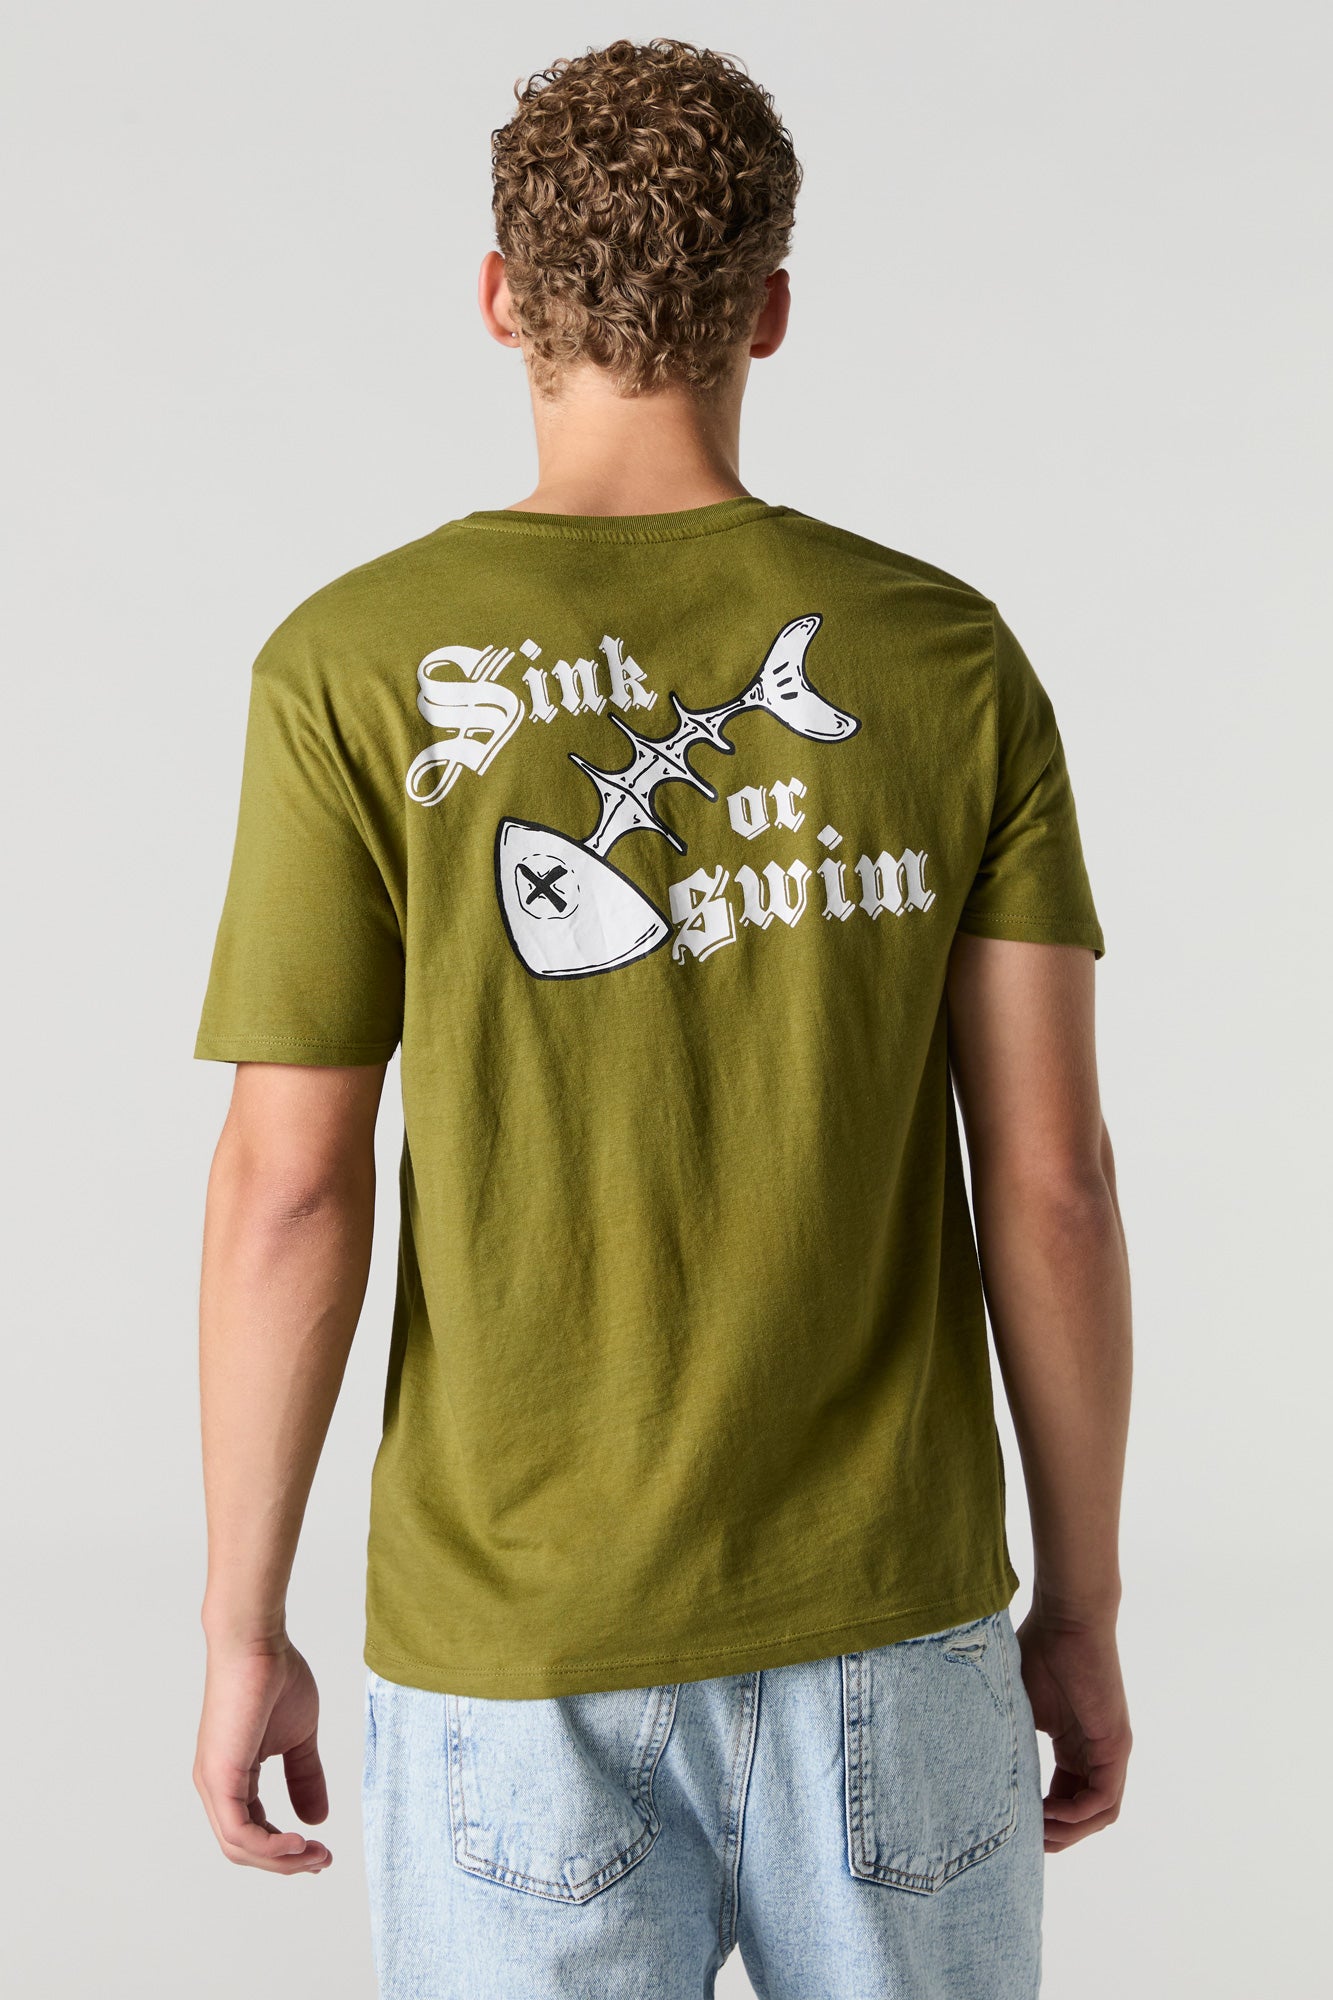 Sink or Swim Graphic T-Shirt